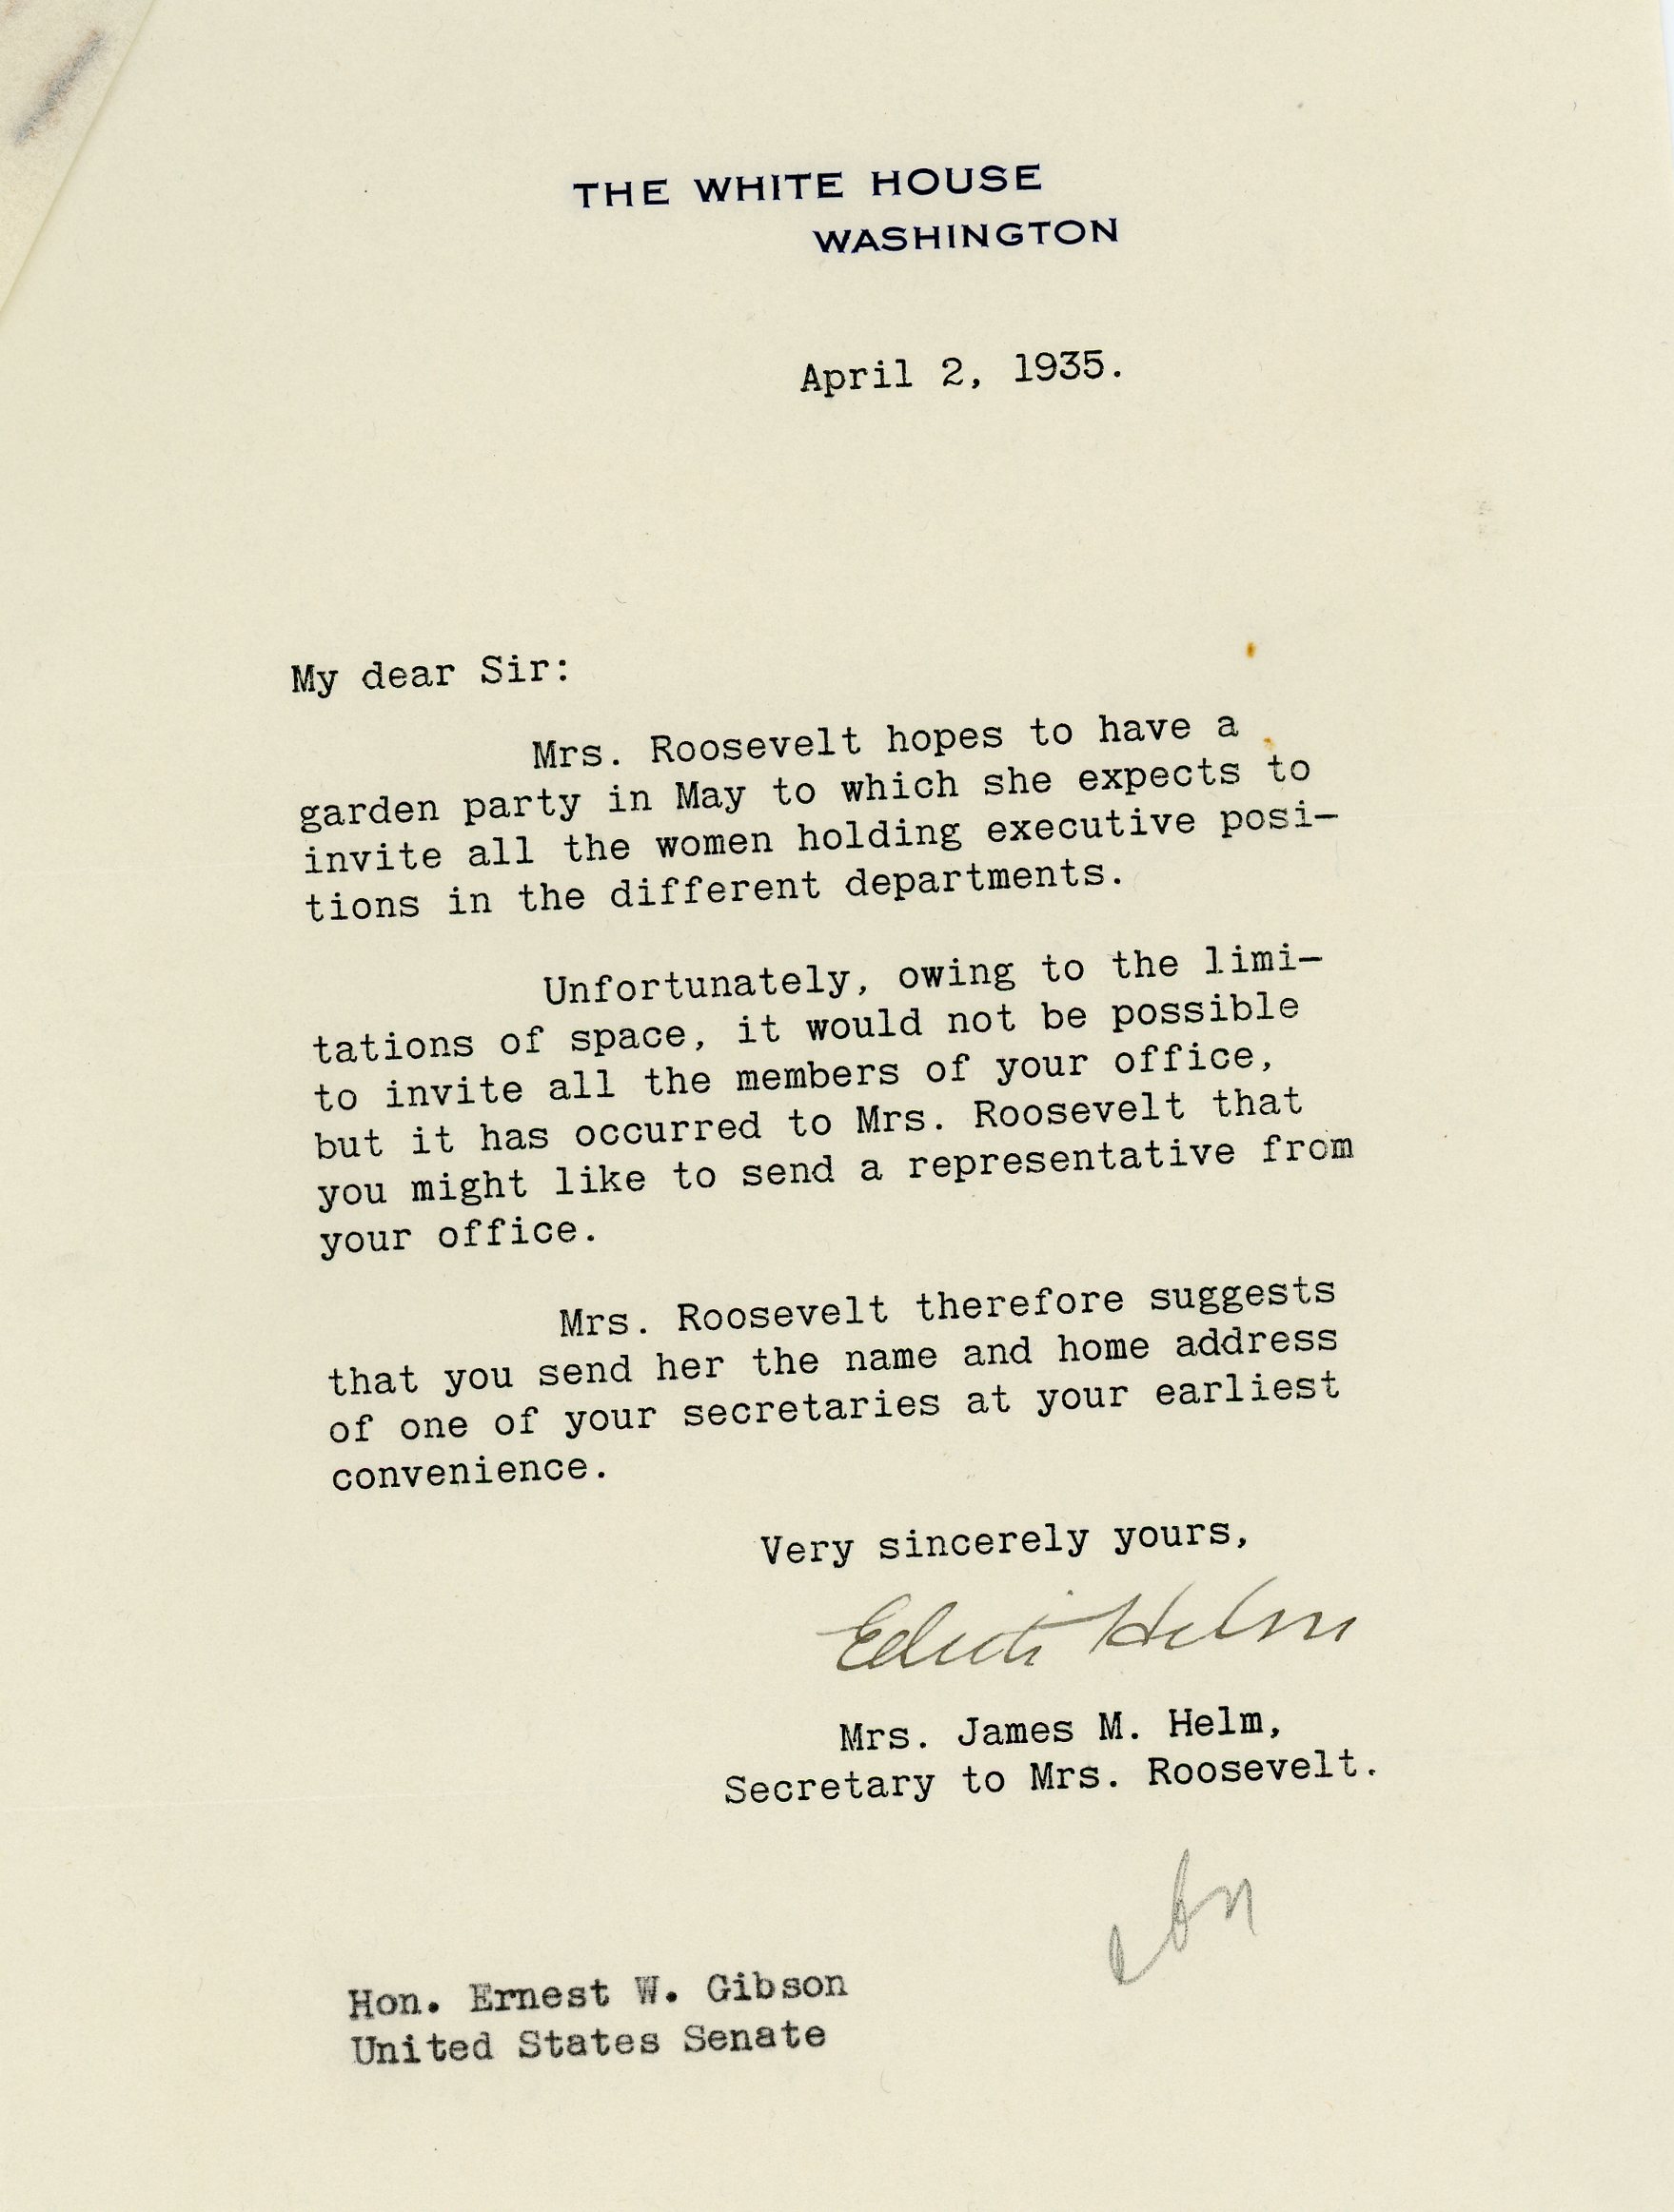 Mrs. James Helm, Secretary of Eleanor Roosevelt, to Senator Ernest Gibson, 1935 April 2